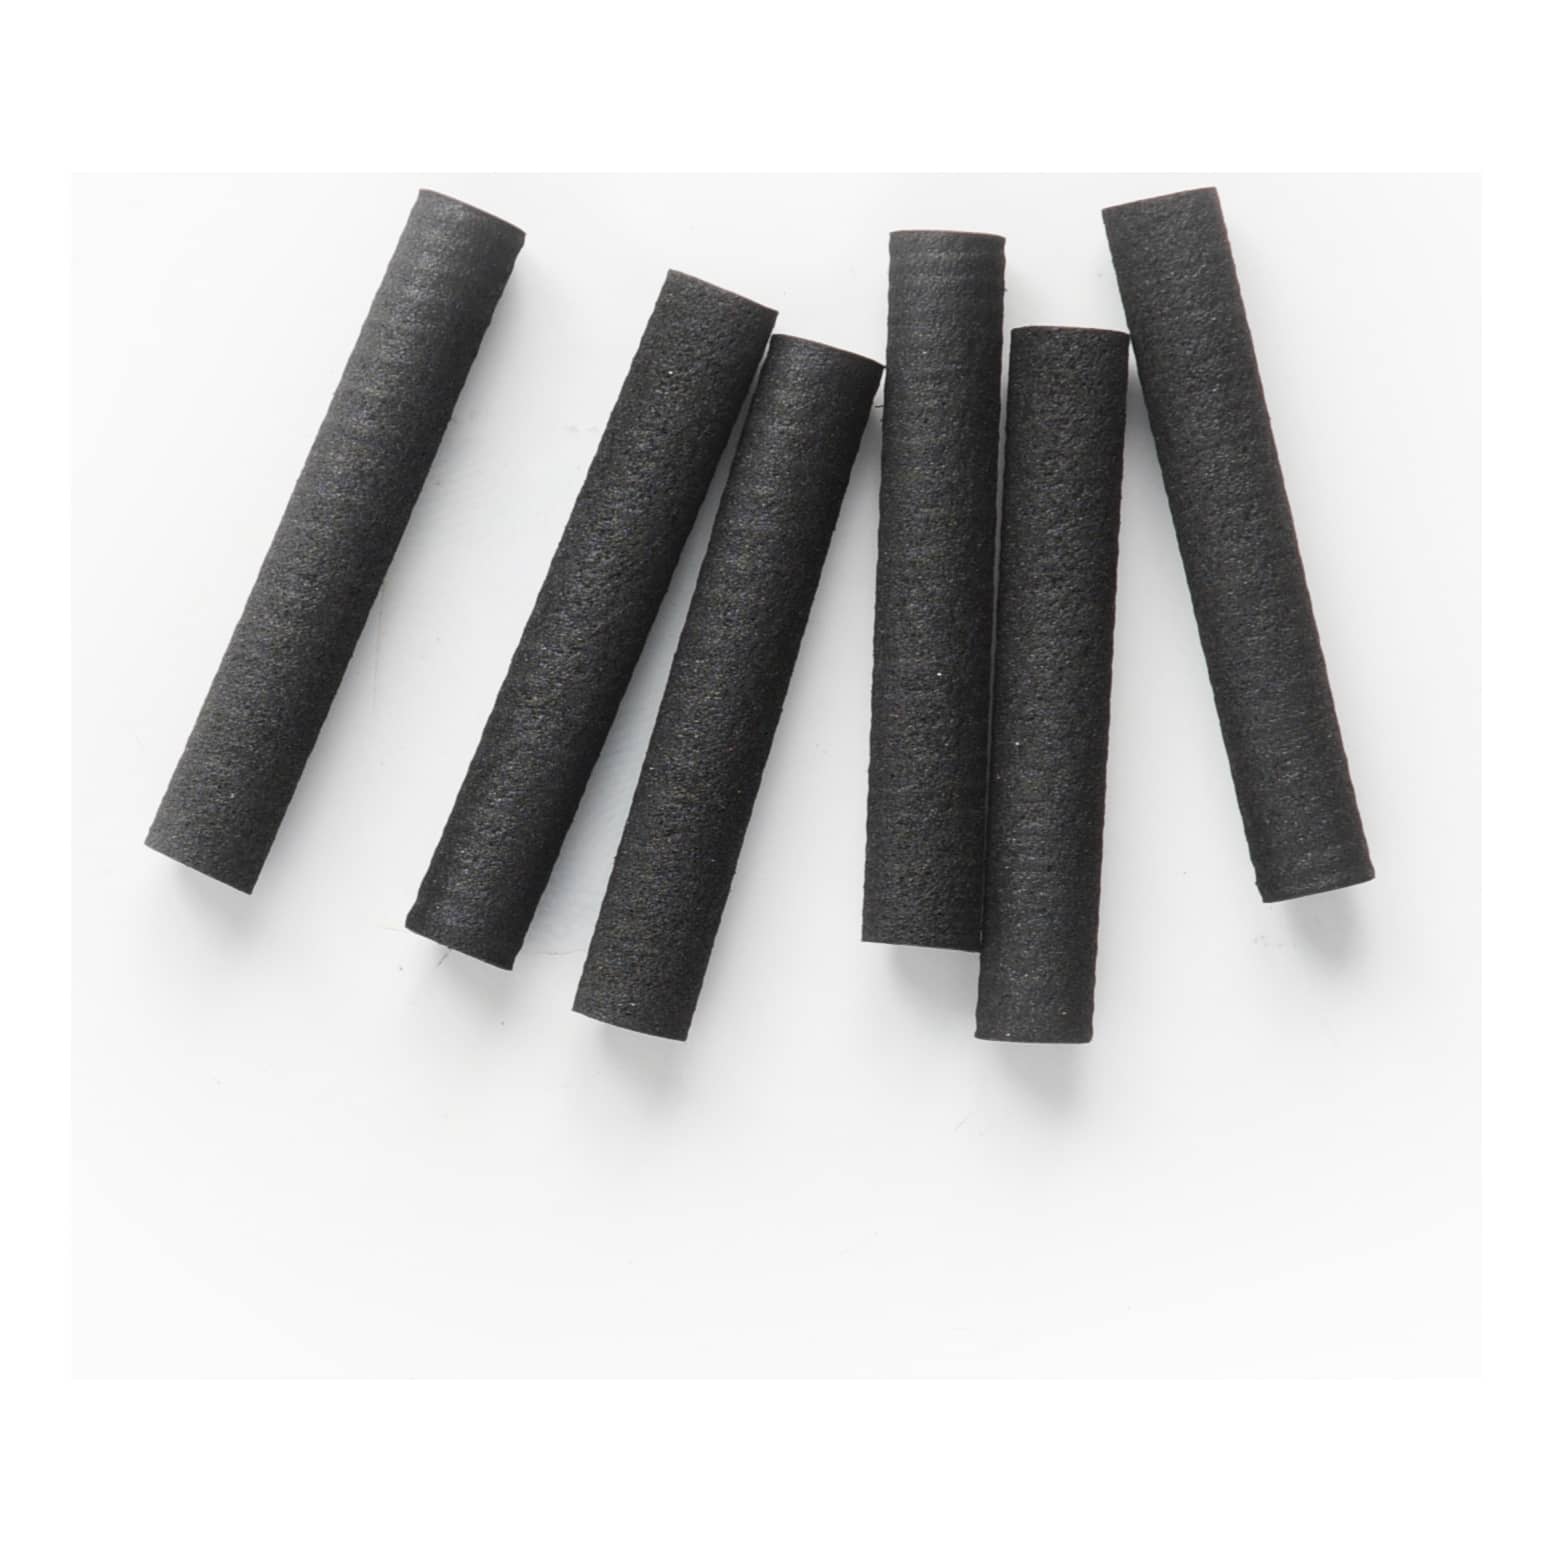 Cabela's 1/4" Foam Cylinders - Black